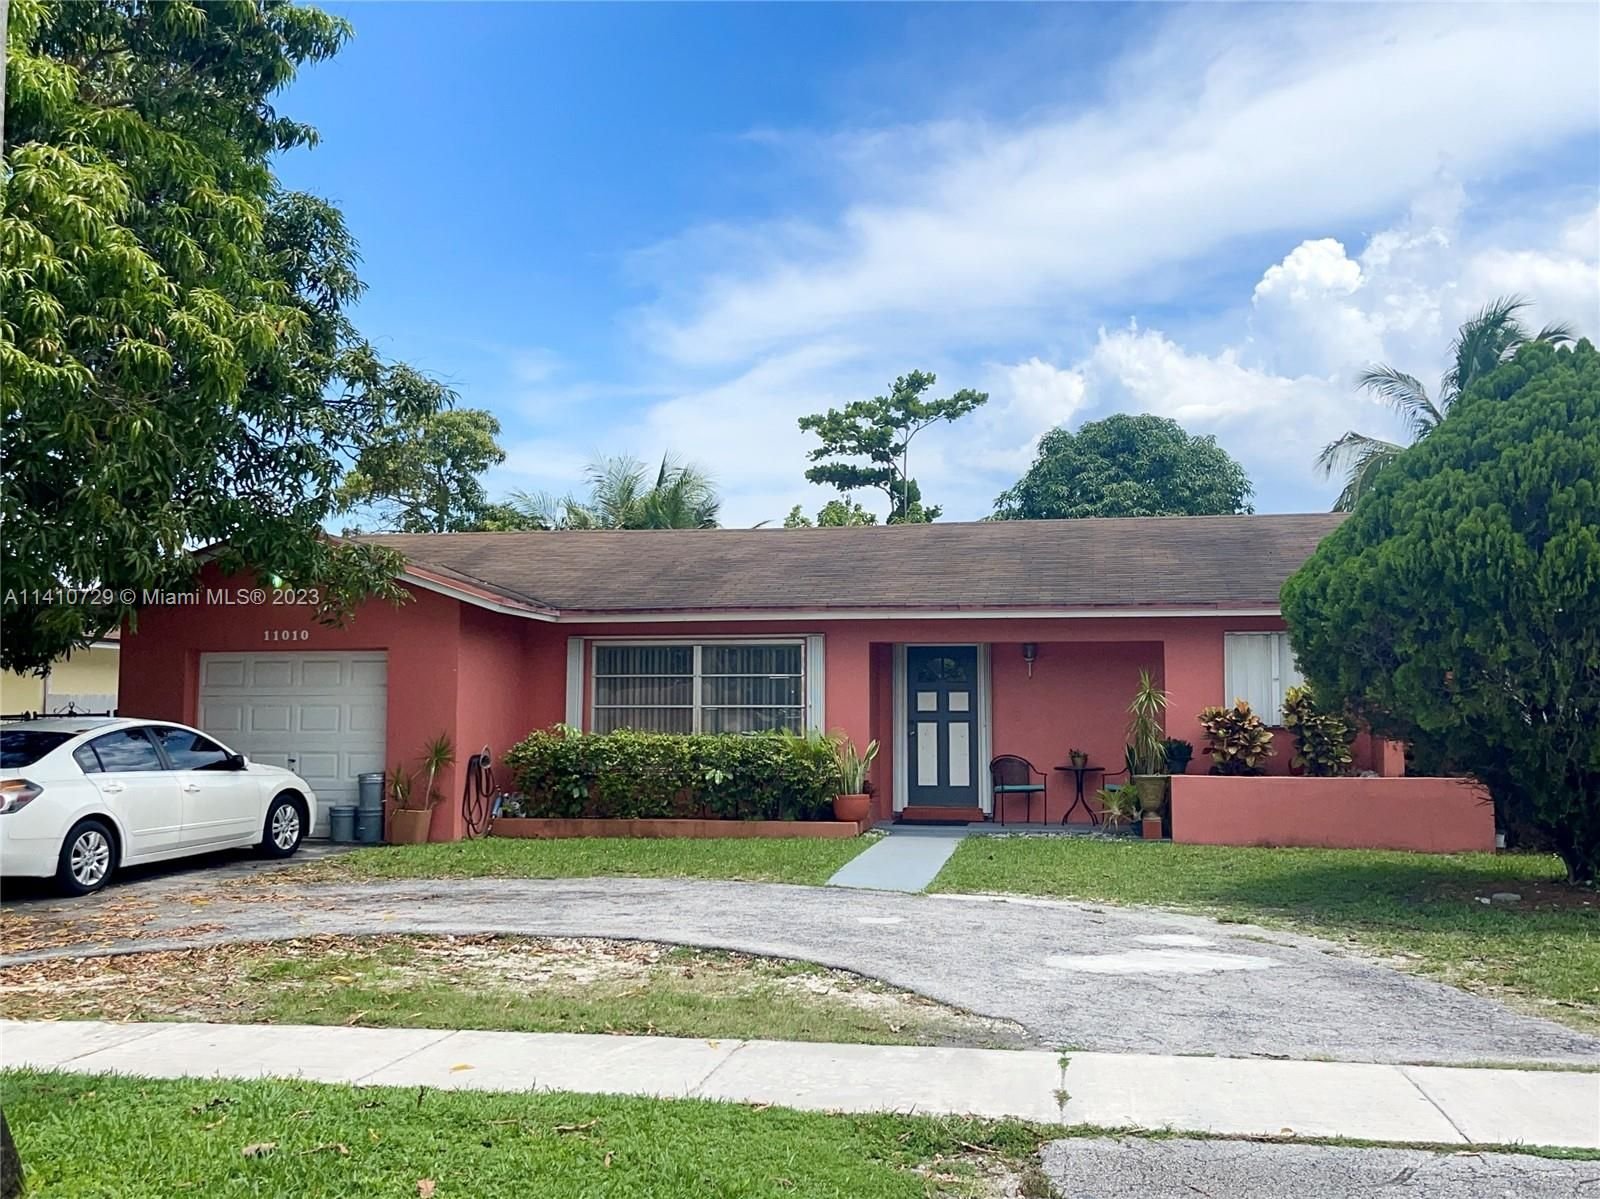 Real estate property located at 11010 160th St, Miami-Dade County, Miami, FL